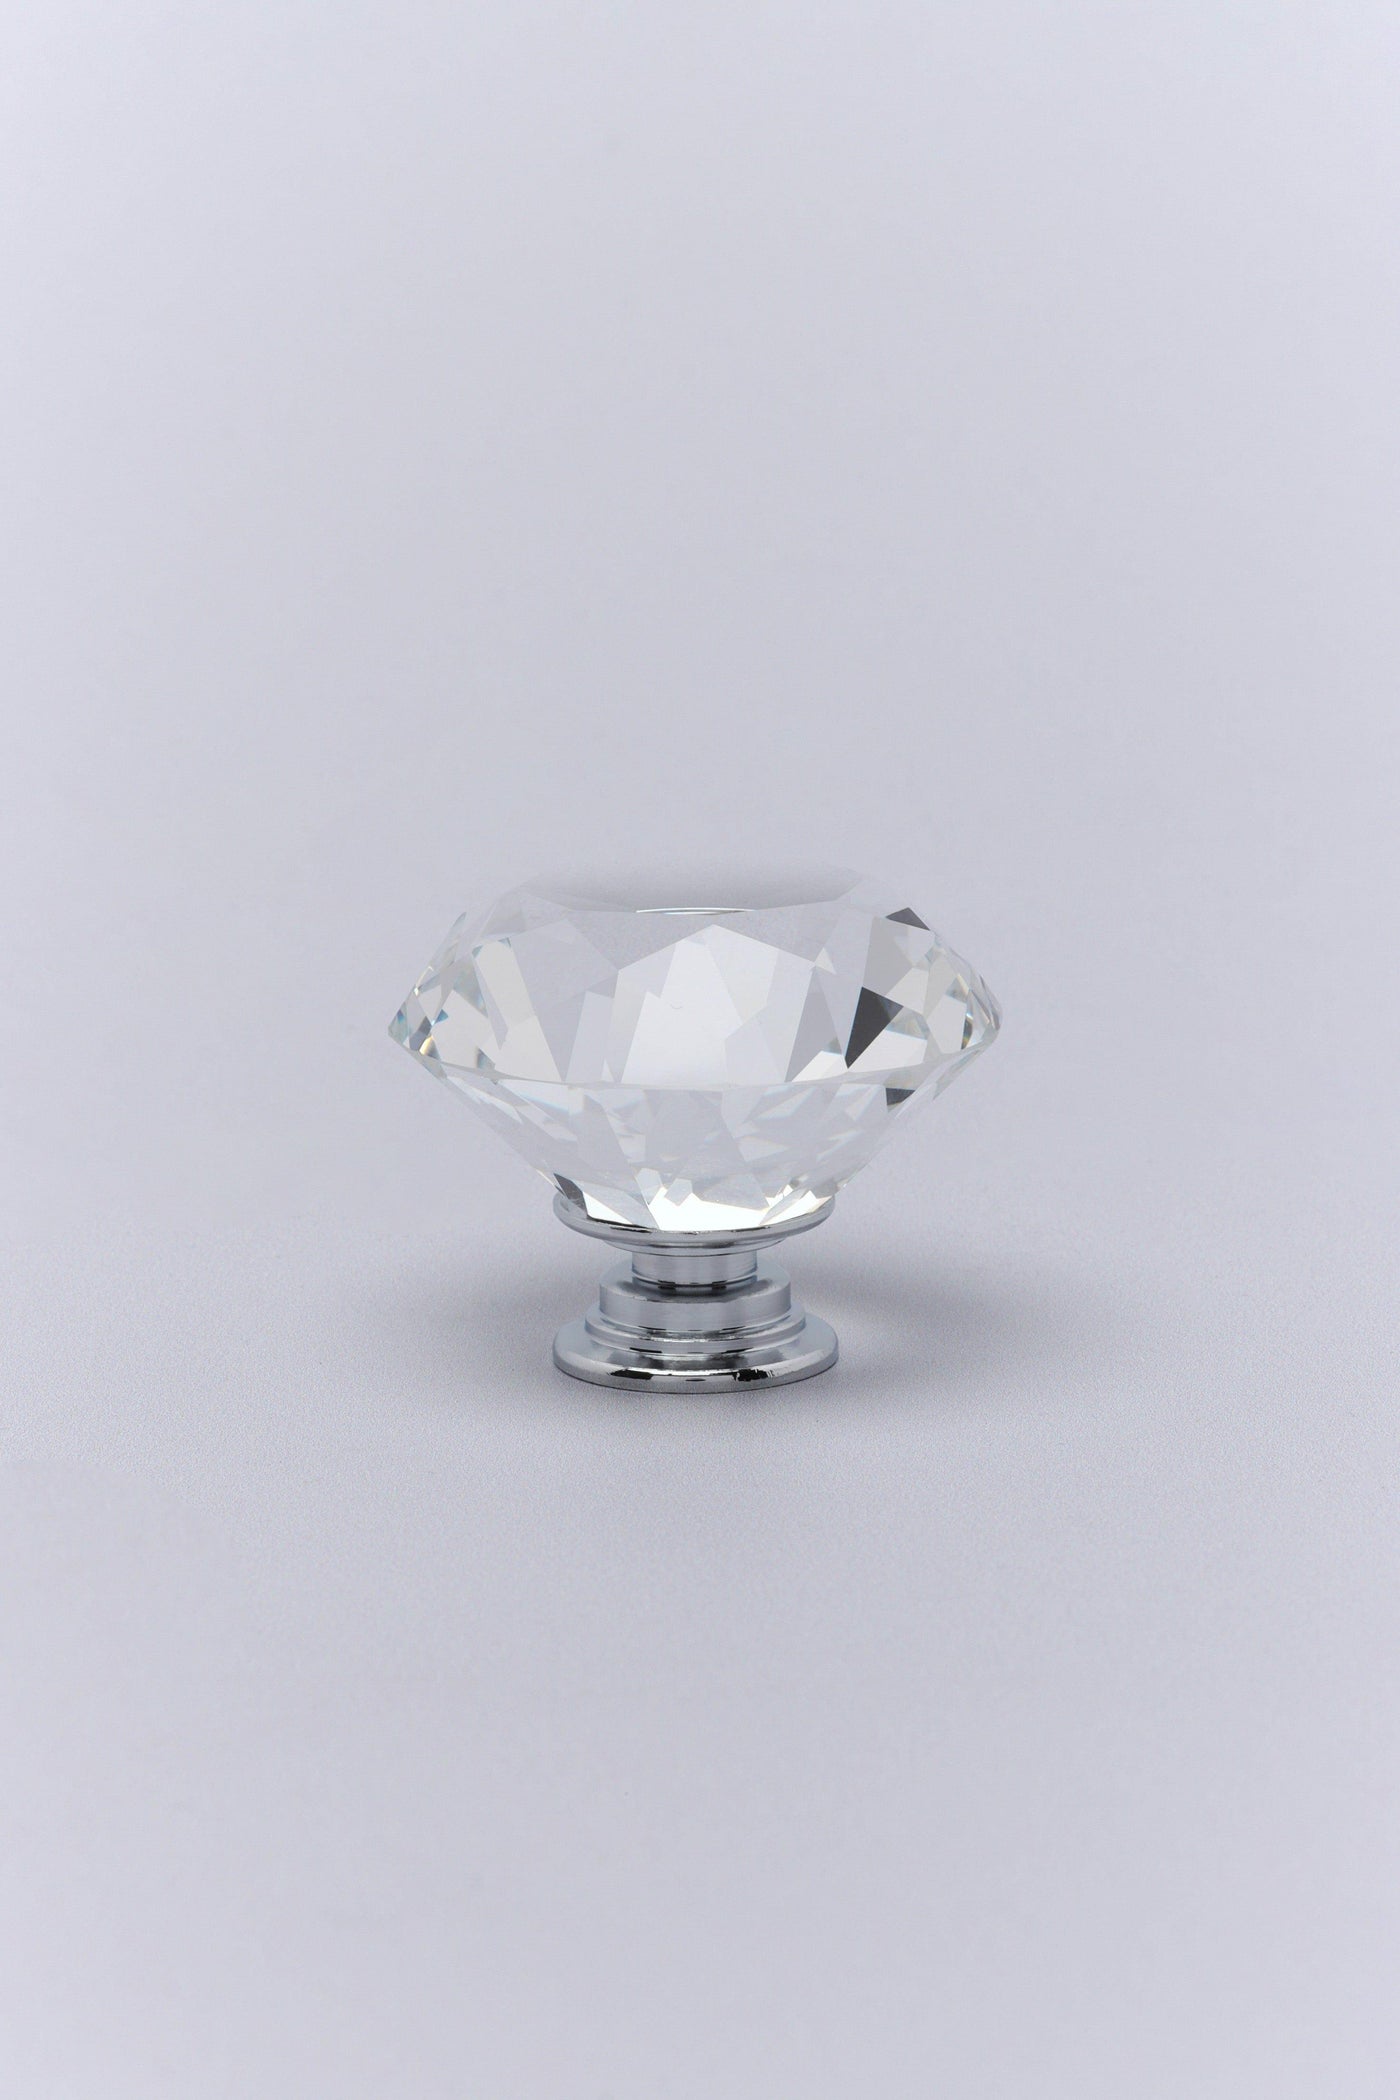 G Decor Door Knobs & Handles Clear / Short diamond Crystal Glass Cupboard Knobs by G Decor